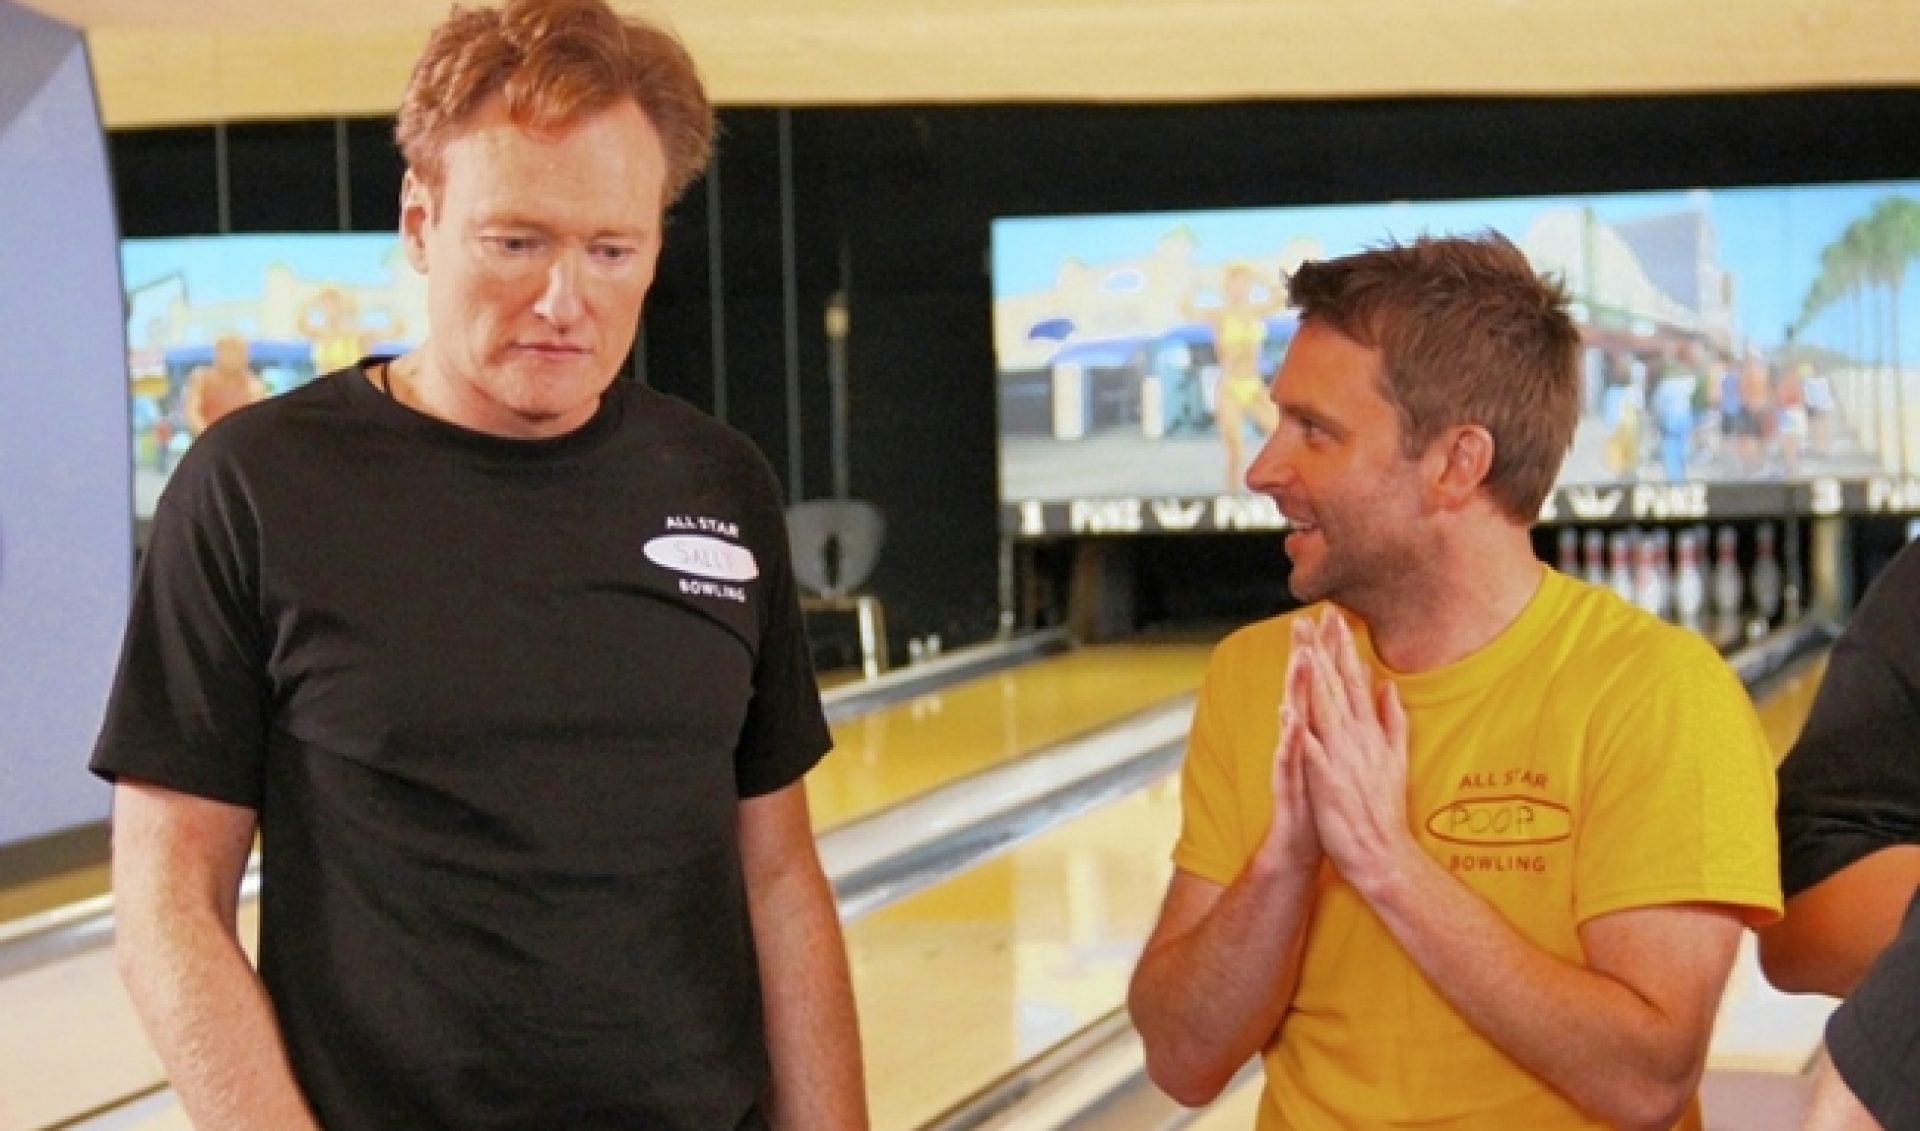 Conan O’Brien (And His Hair) Bowl Against Chris Hardwick On Nerdist